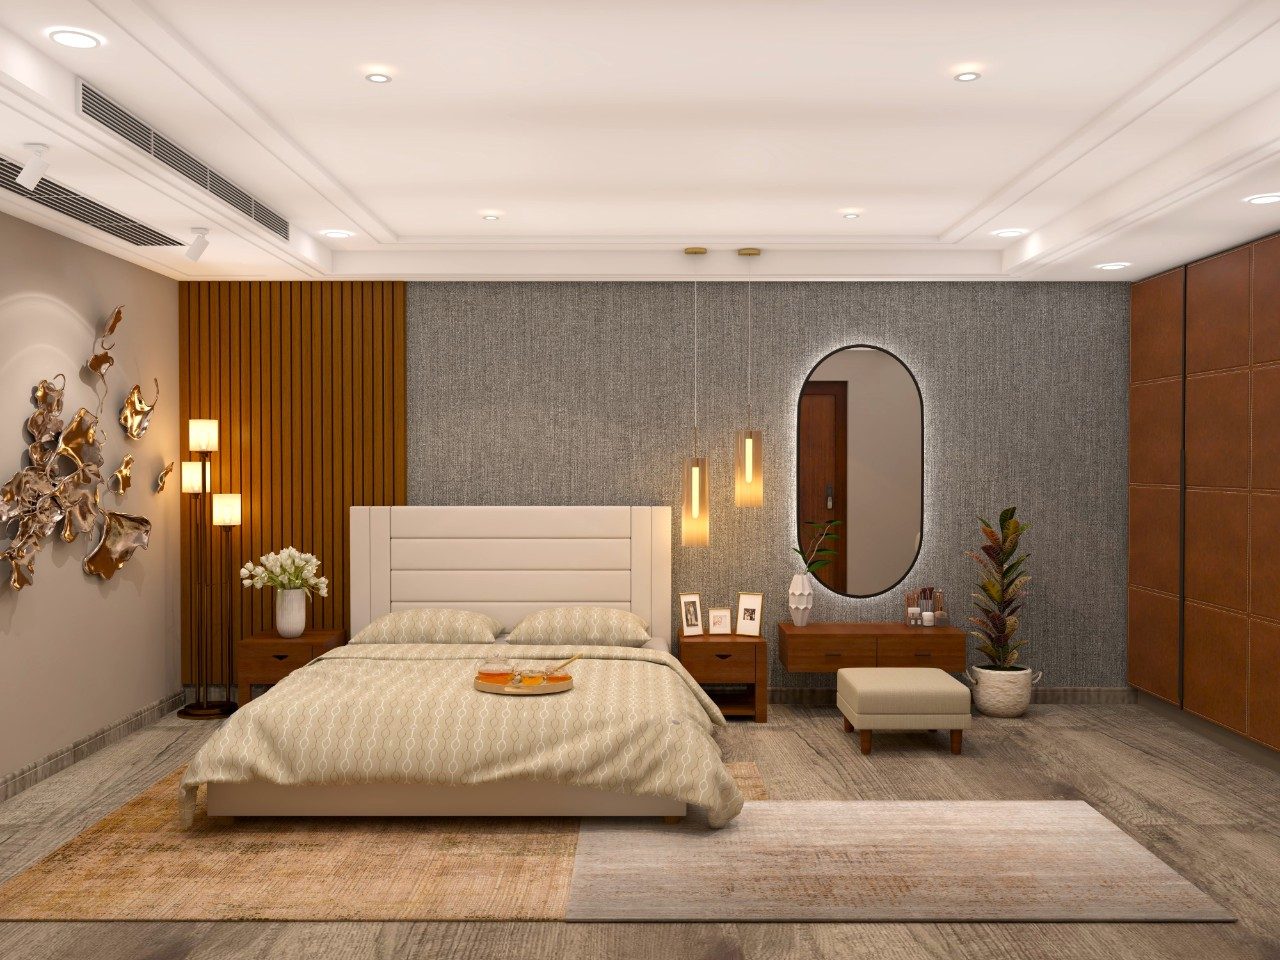 Fashionably geometric designer ceilings for bedroom - Modern Bedroom Ceiling Designs